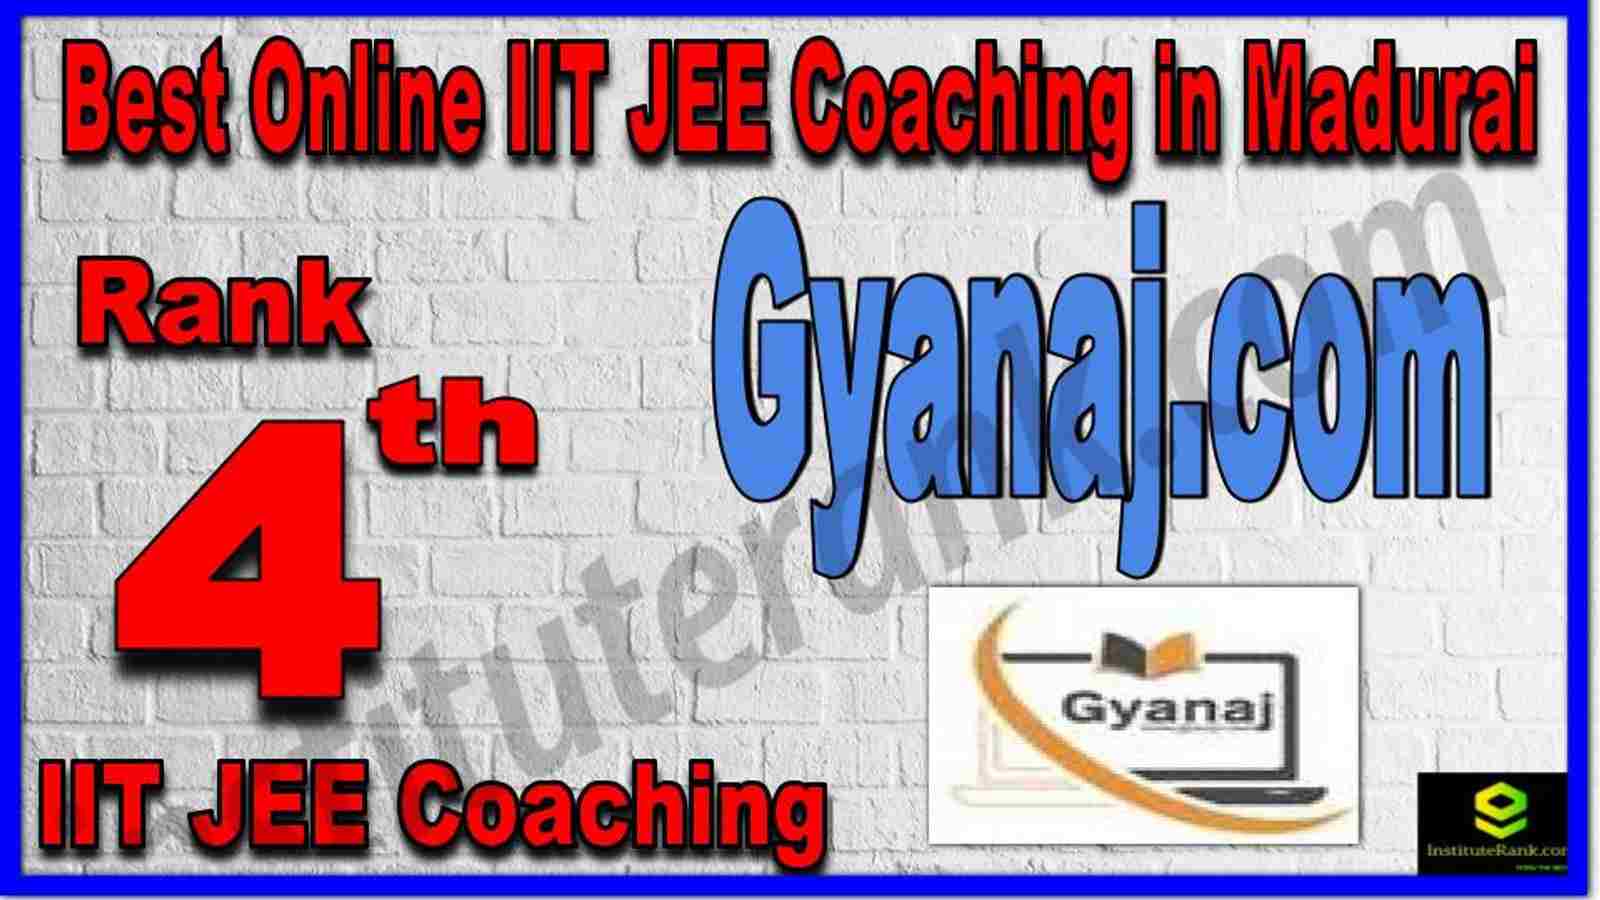 Rank 4th Best Online IIT JEE Coaching in Madurai